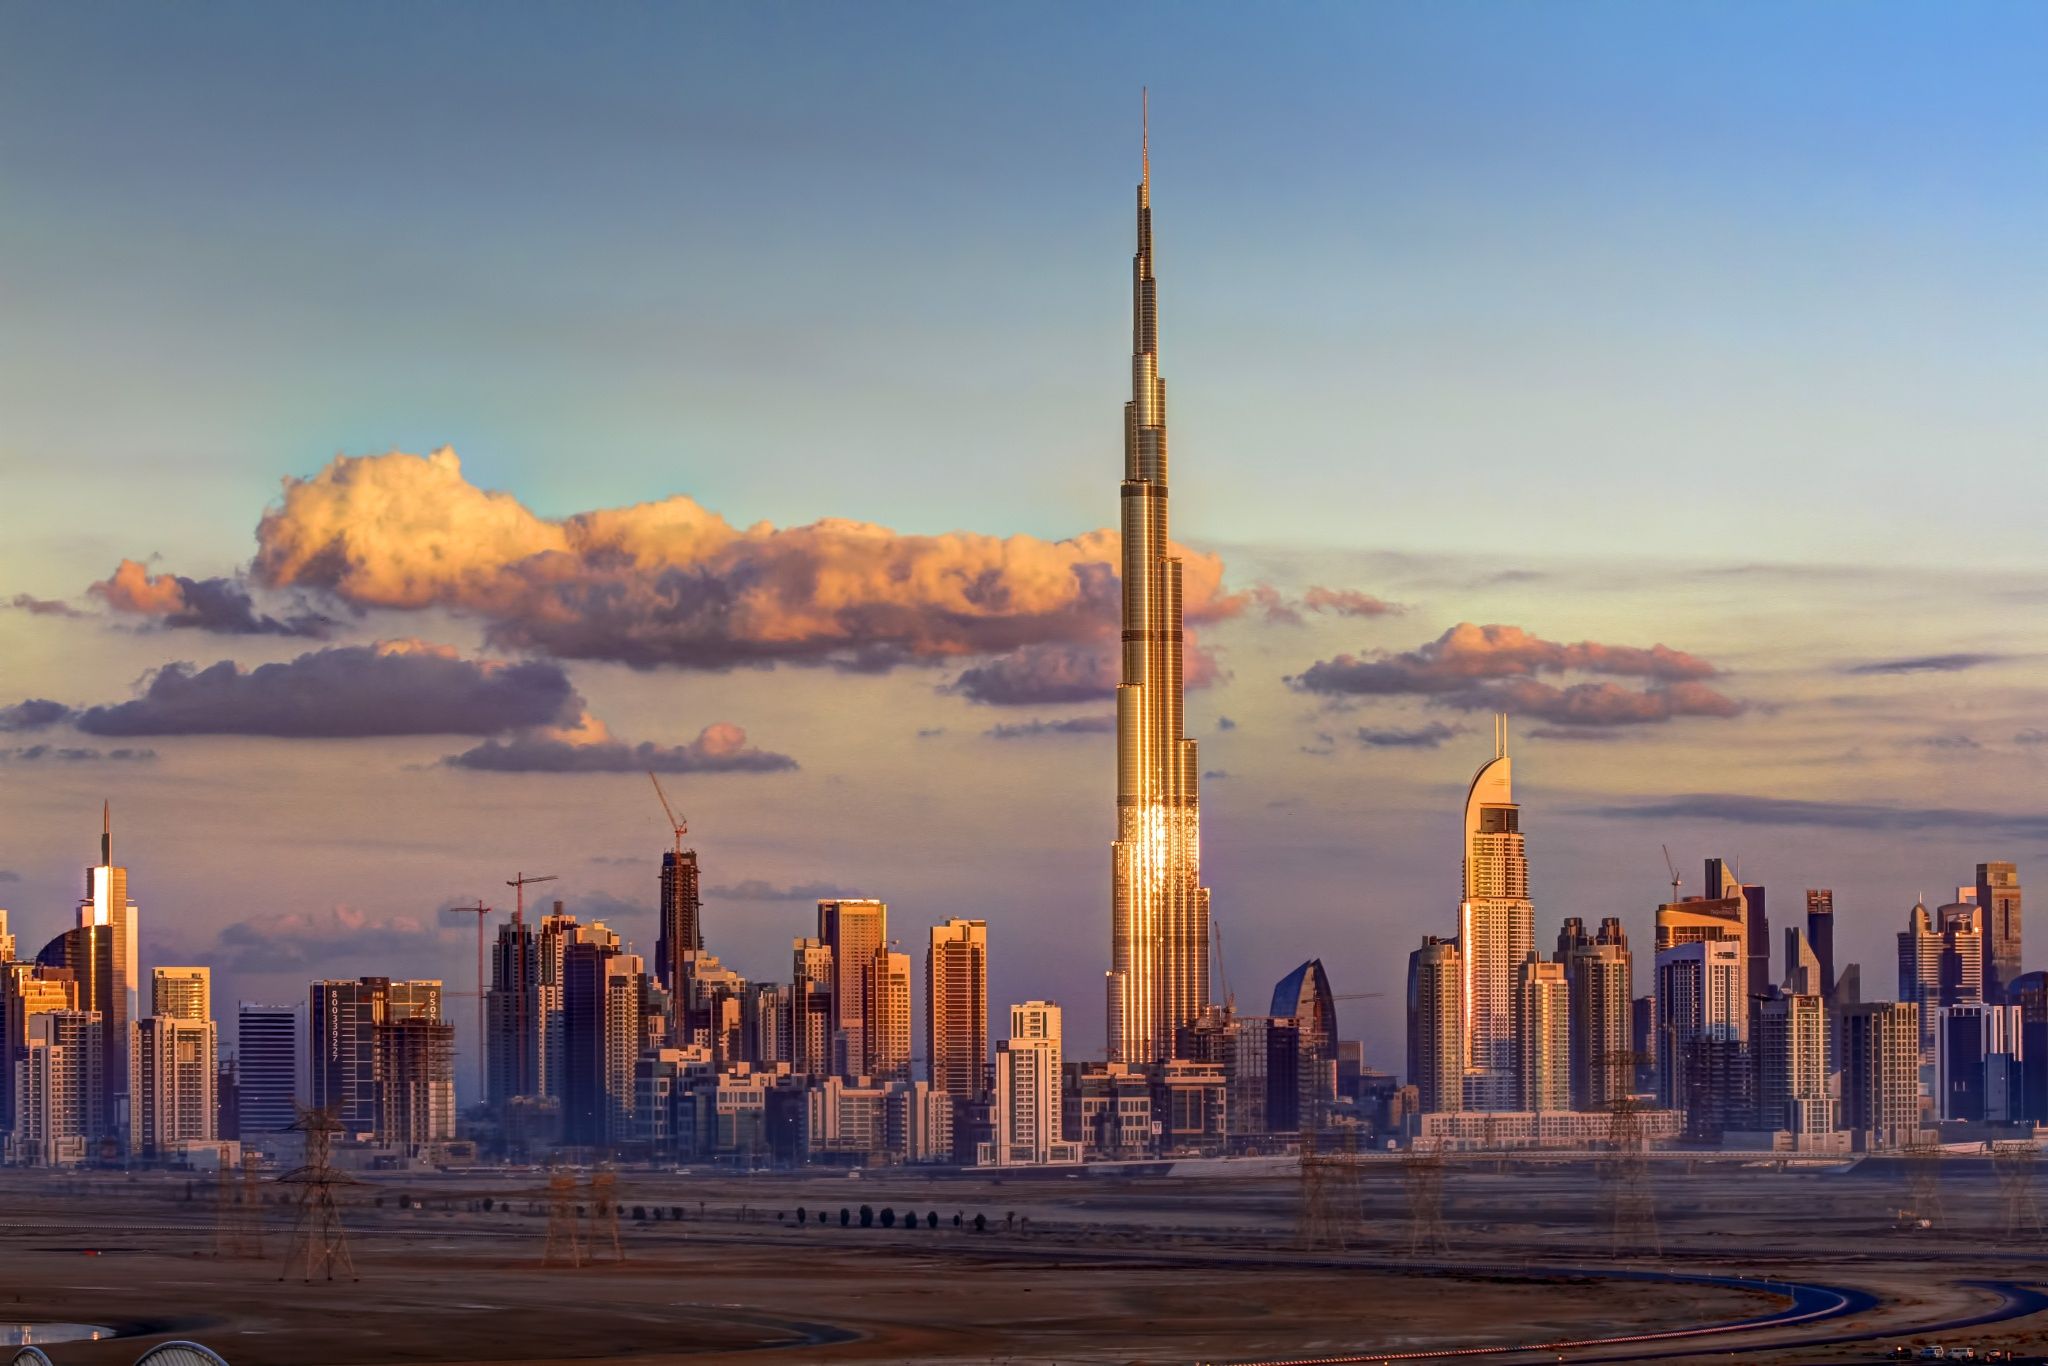 Properties for sale in Dubai